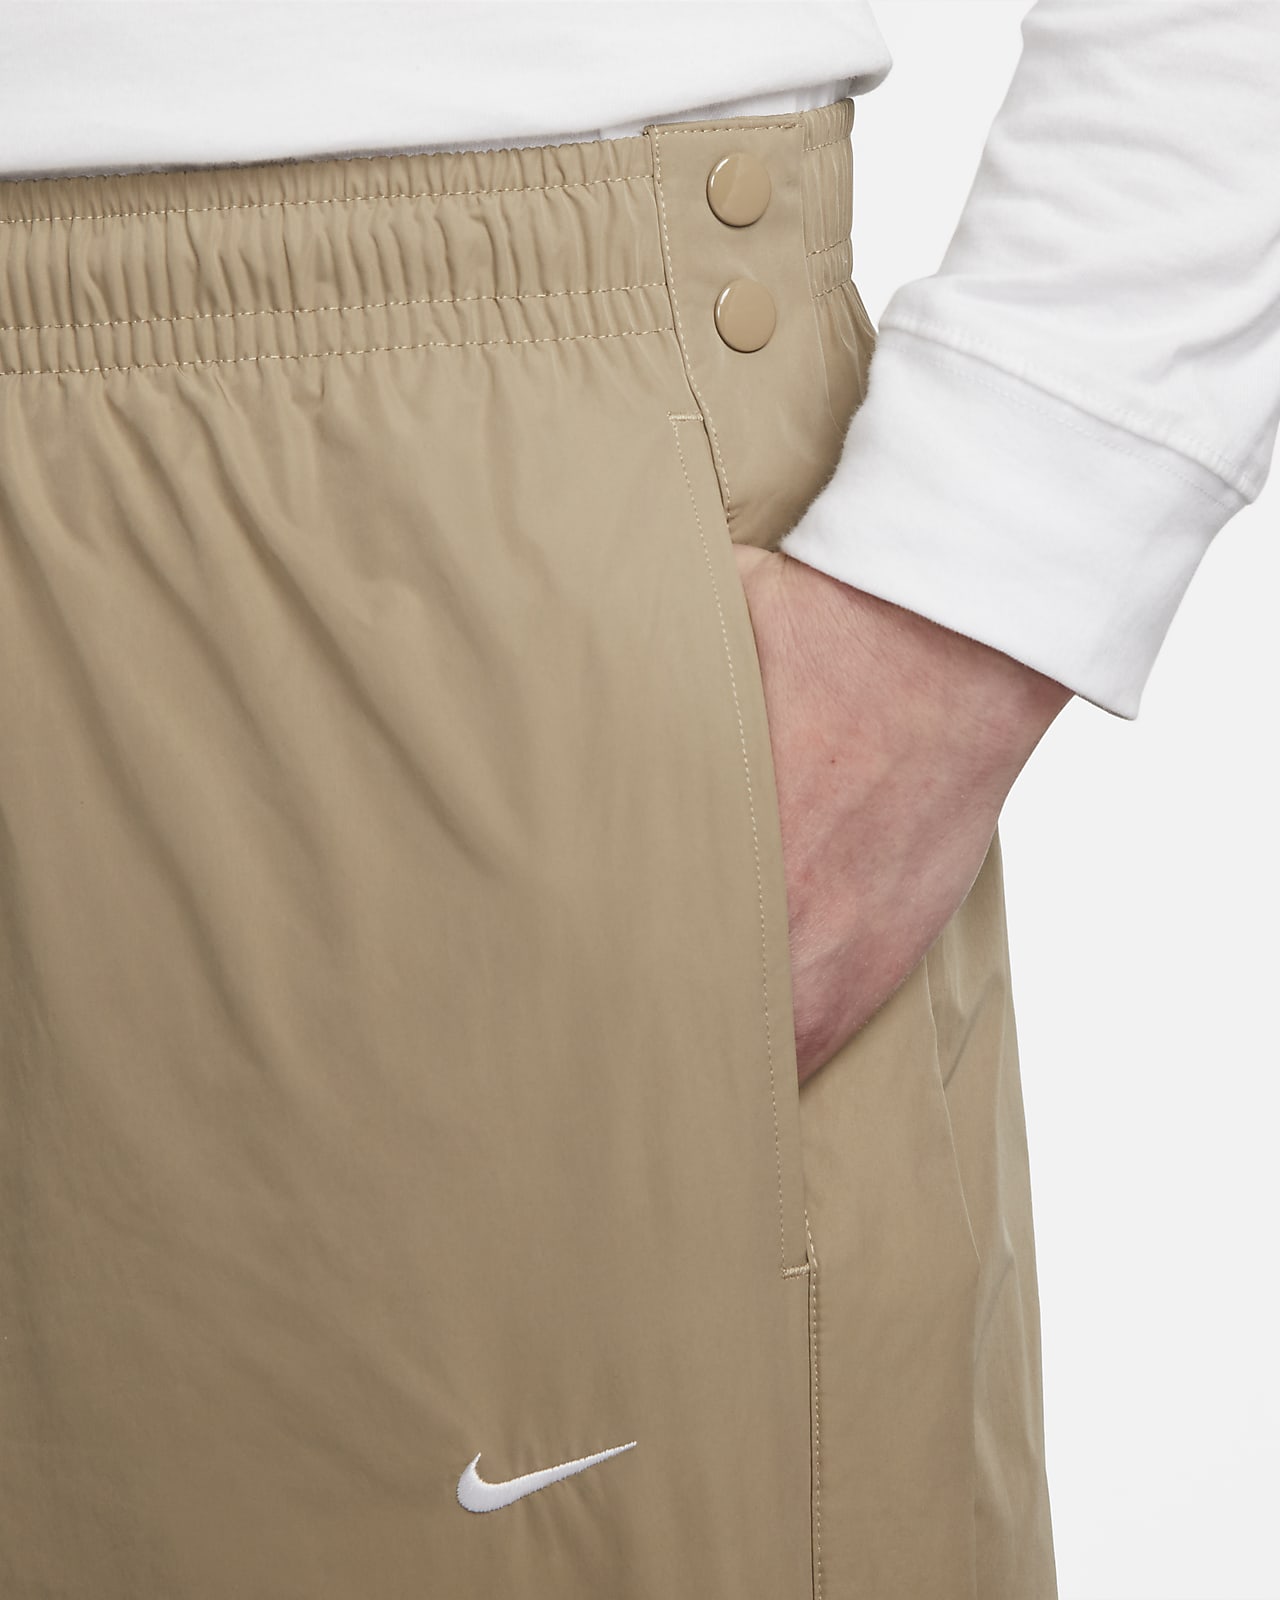 Post Surgery Tearaway Pants Men's Women's Unisex Sizing -  Sweden